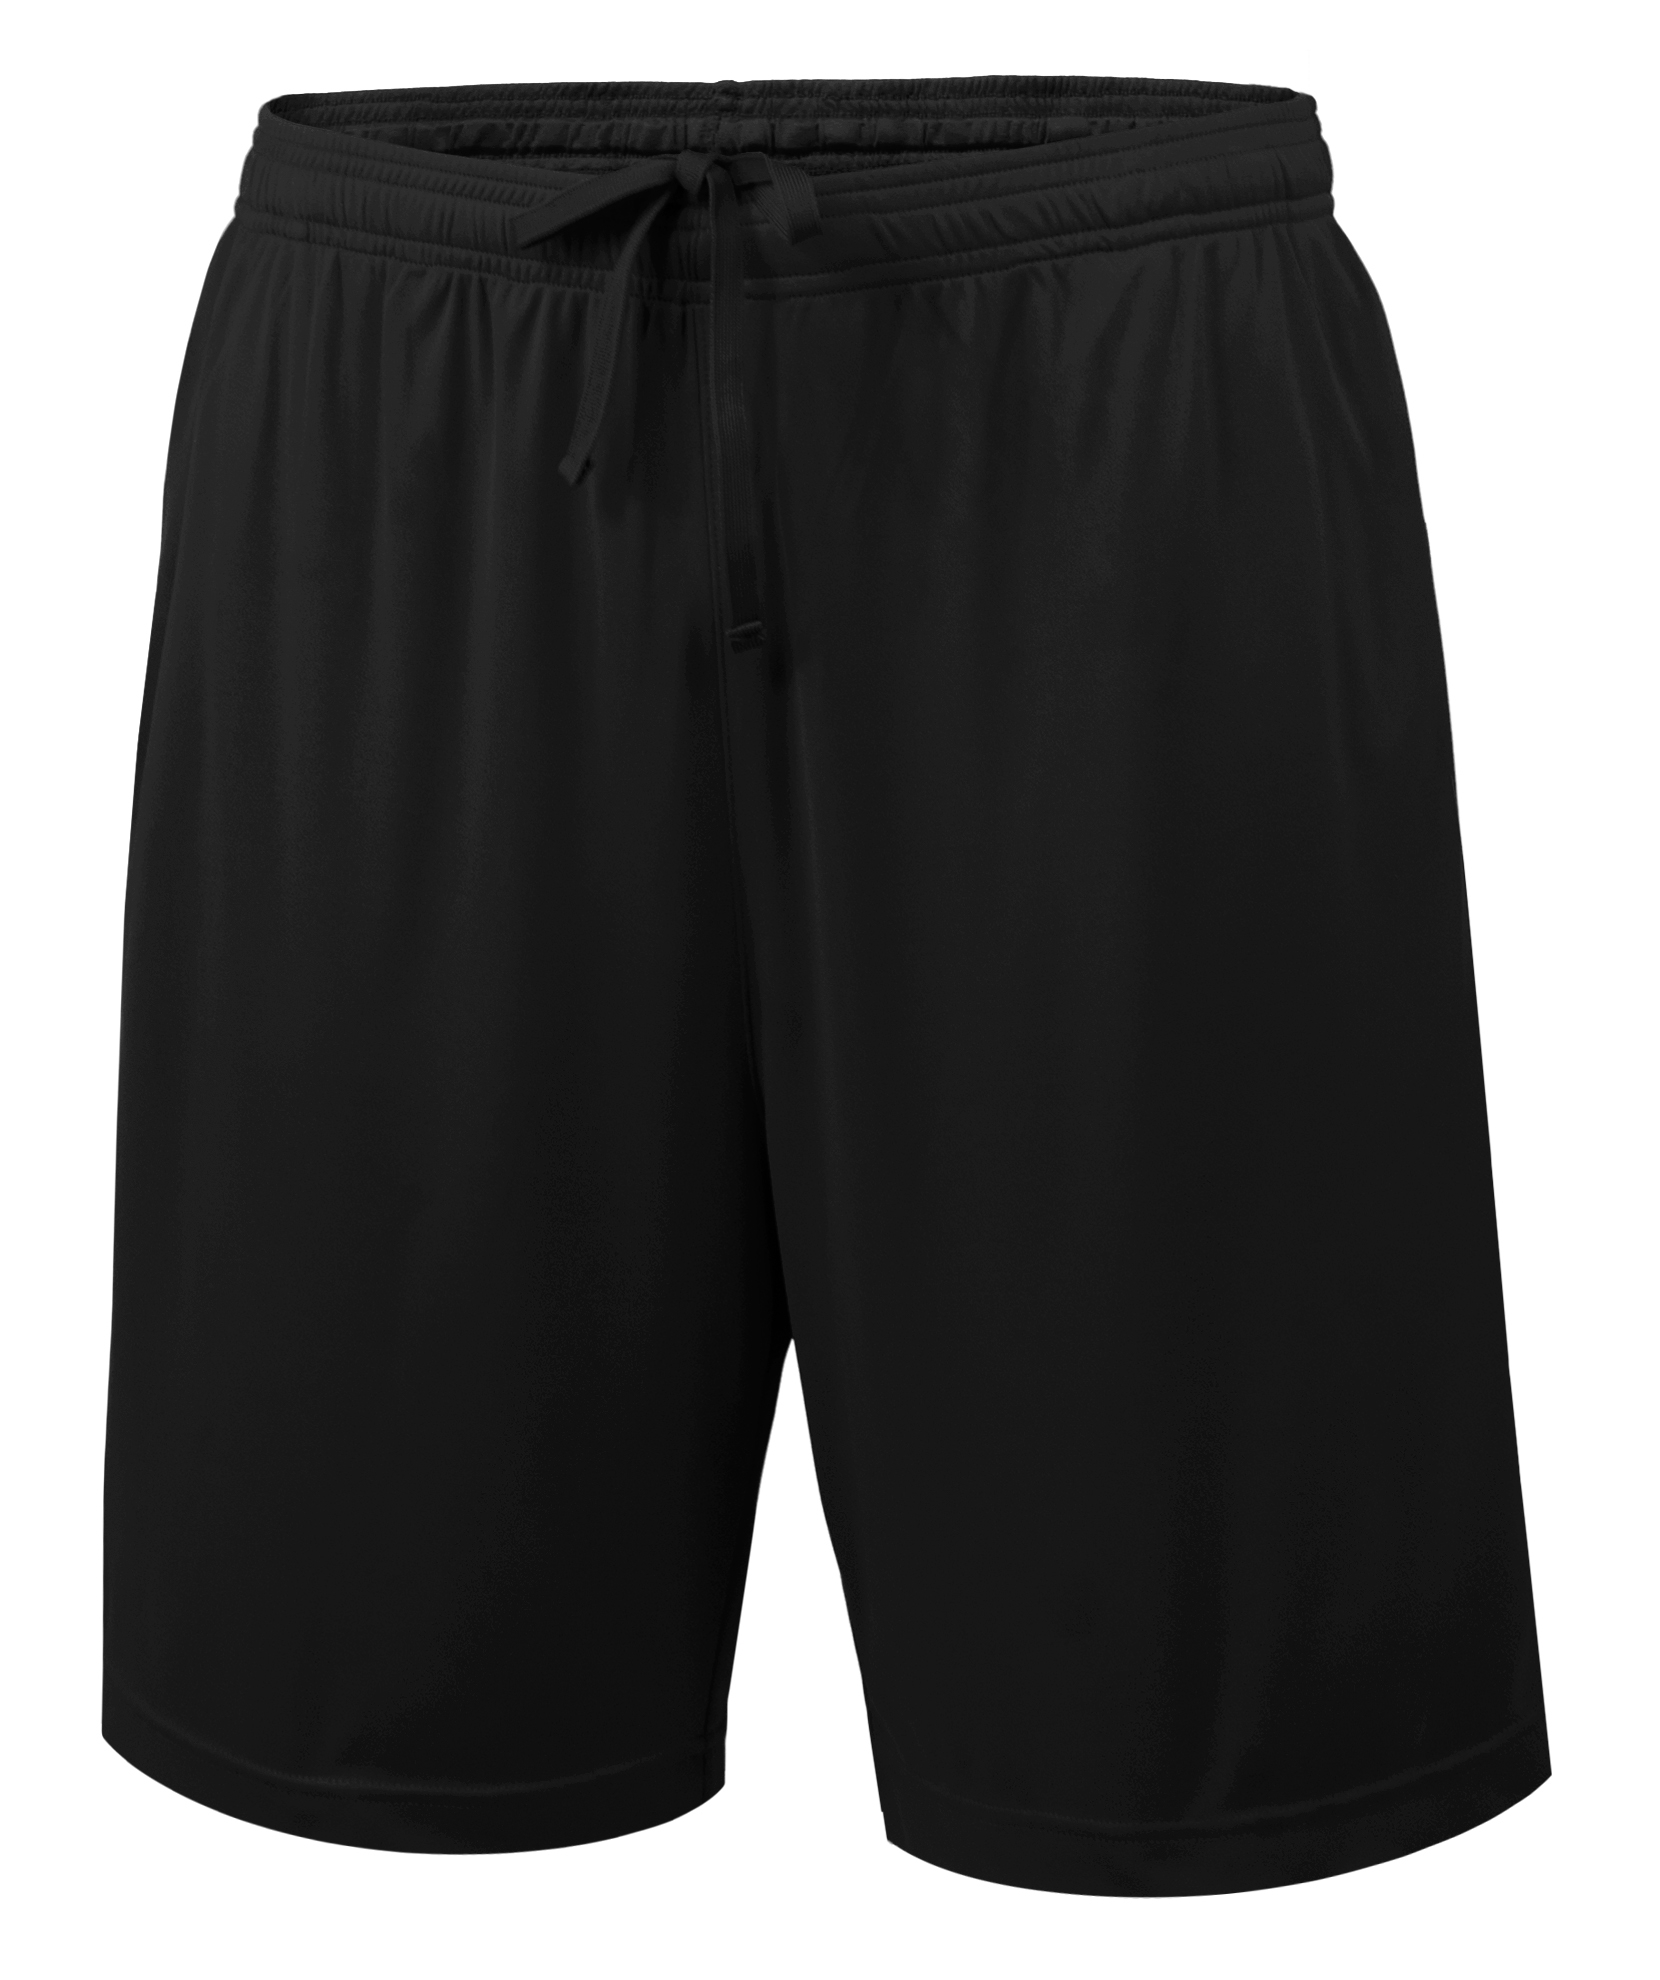 BAW Athletic Wear S709 / S709H - Men's Xtreme-Tek Pocket Short